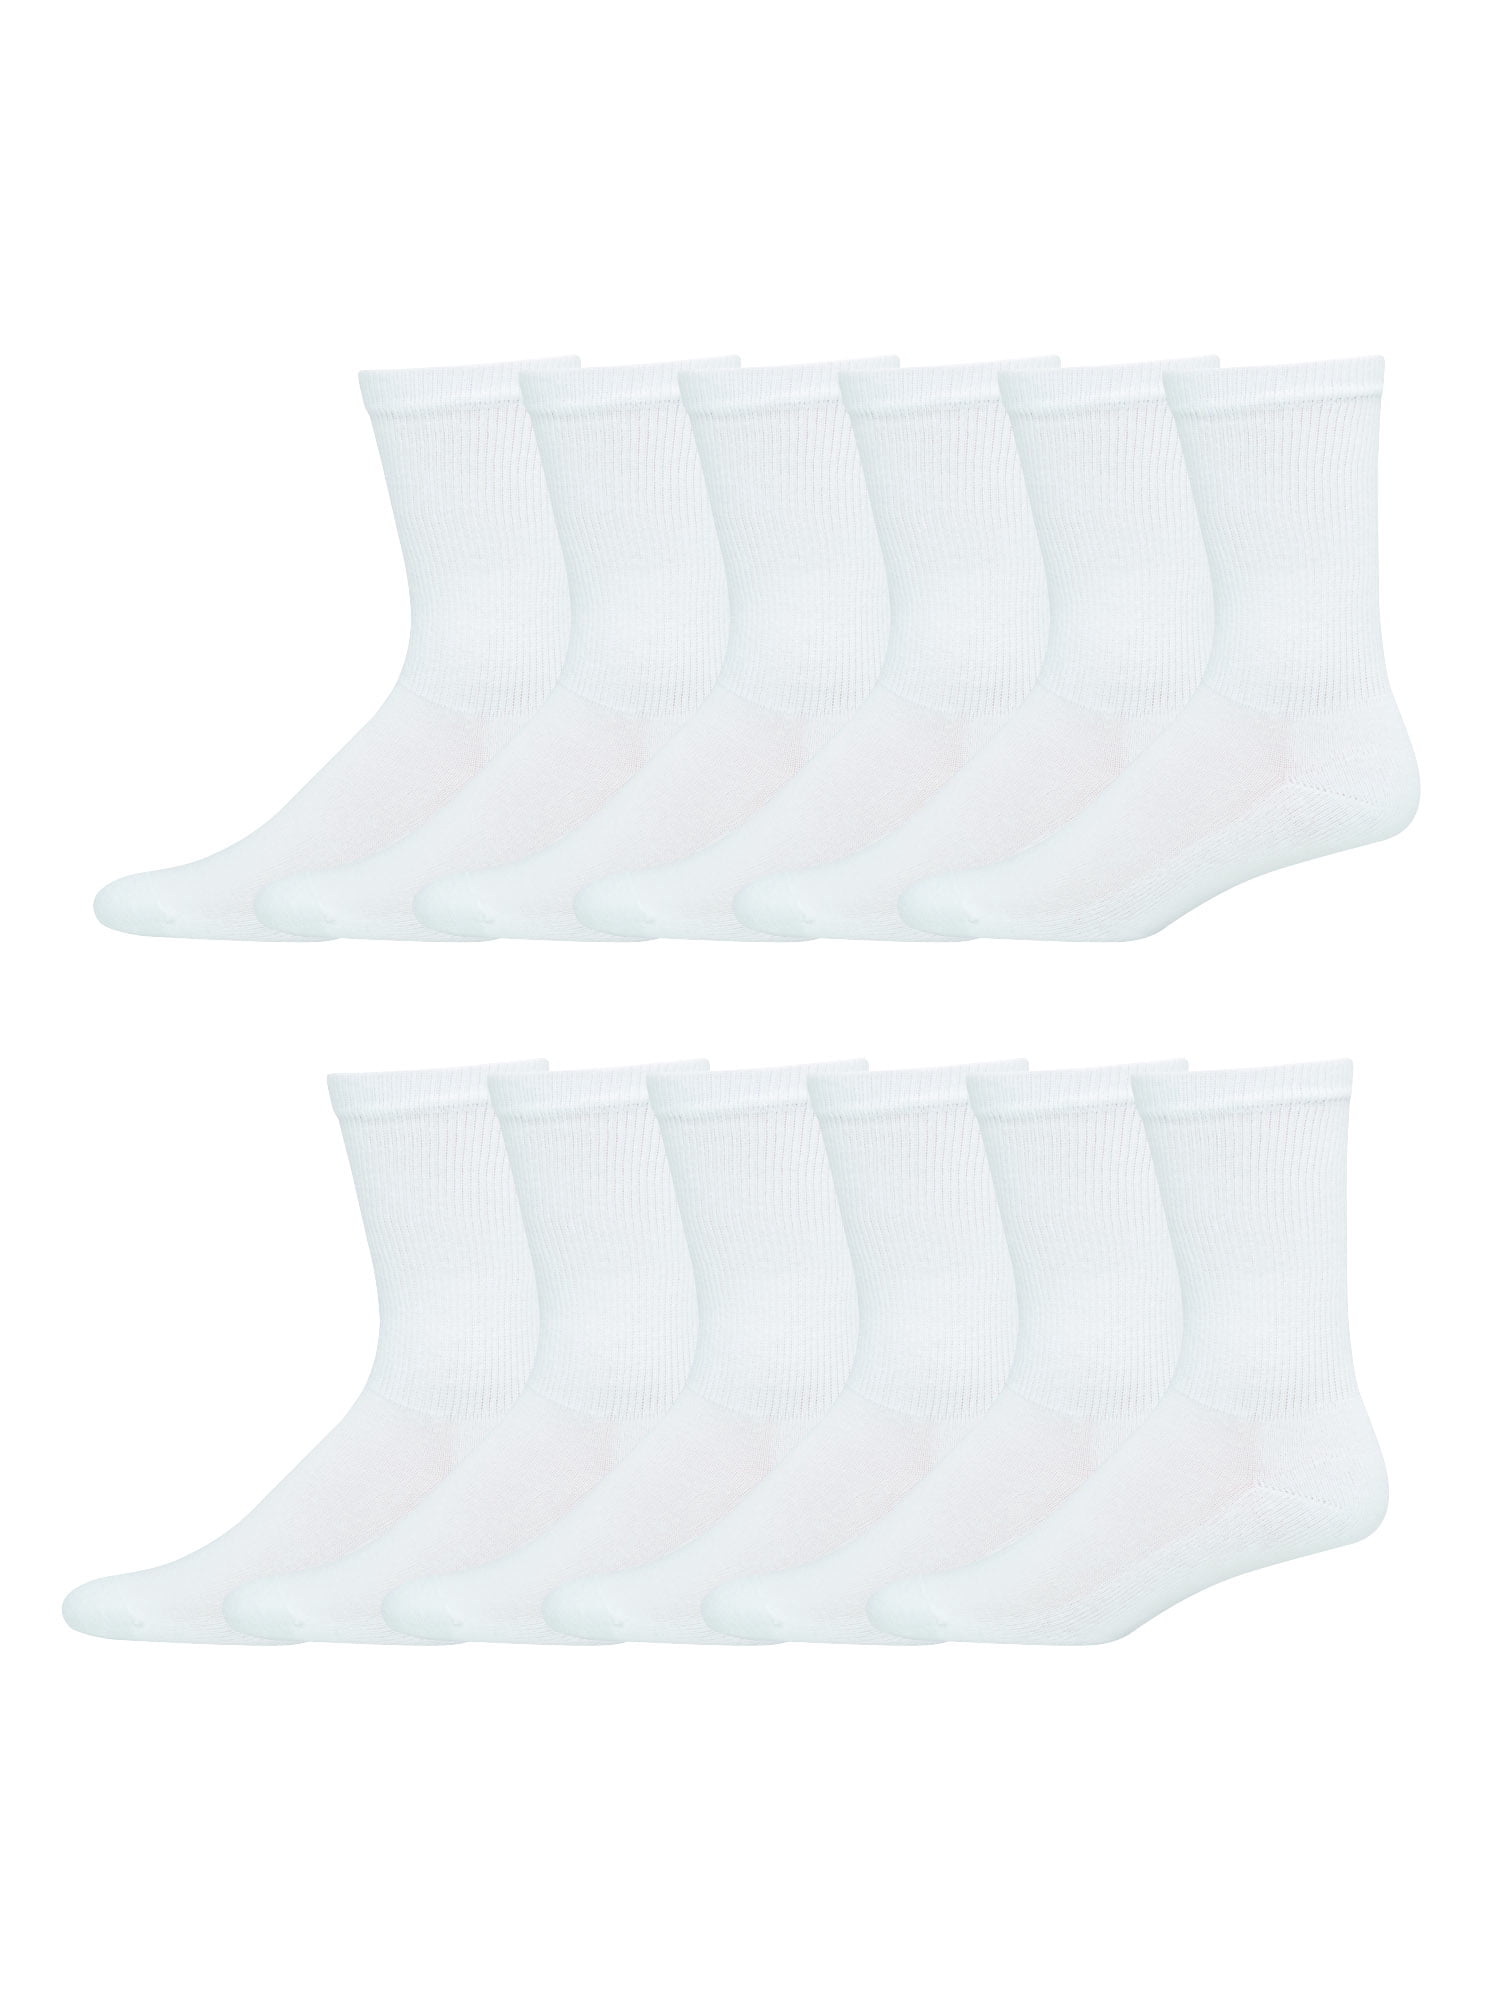 12-Pairs Hanes Girls Comfortblend Crew Socks White ALL SIZES 